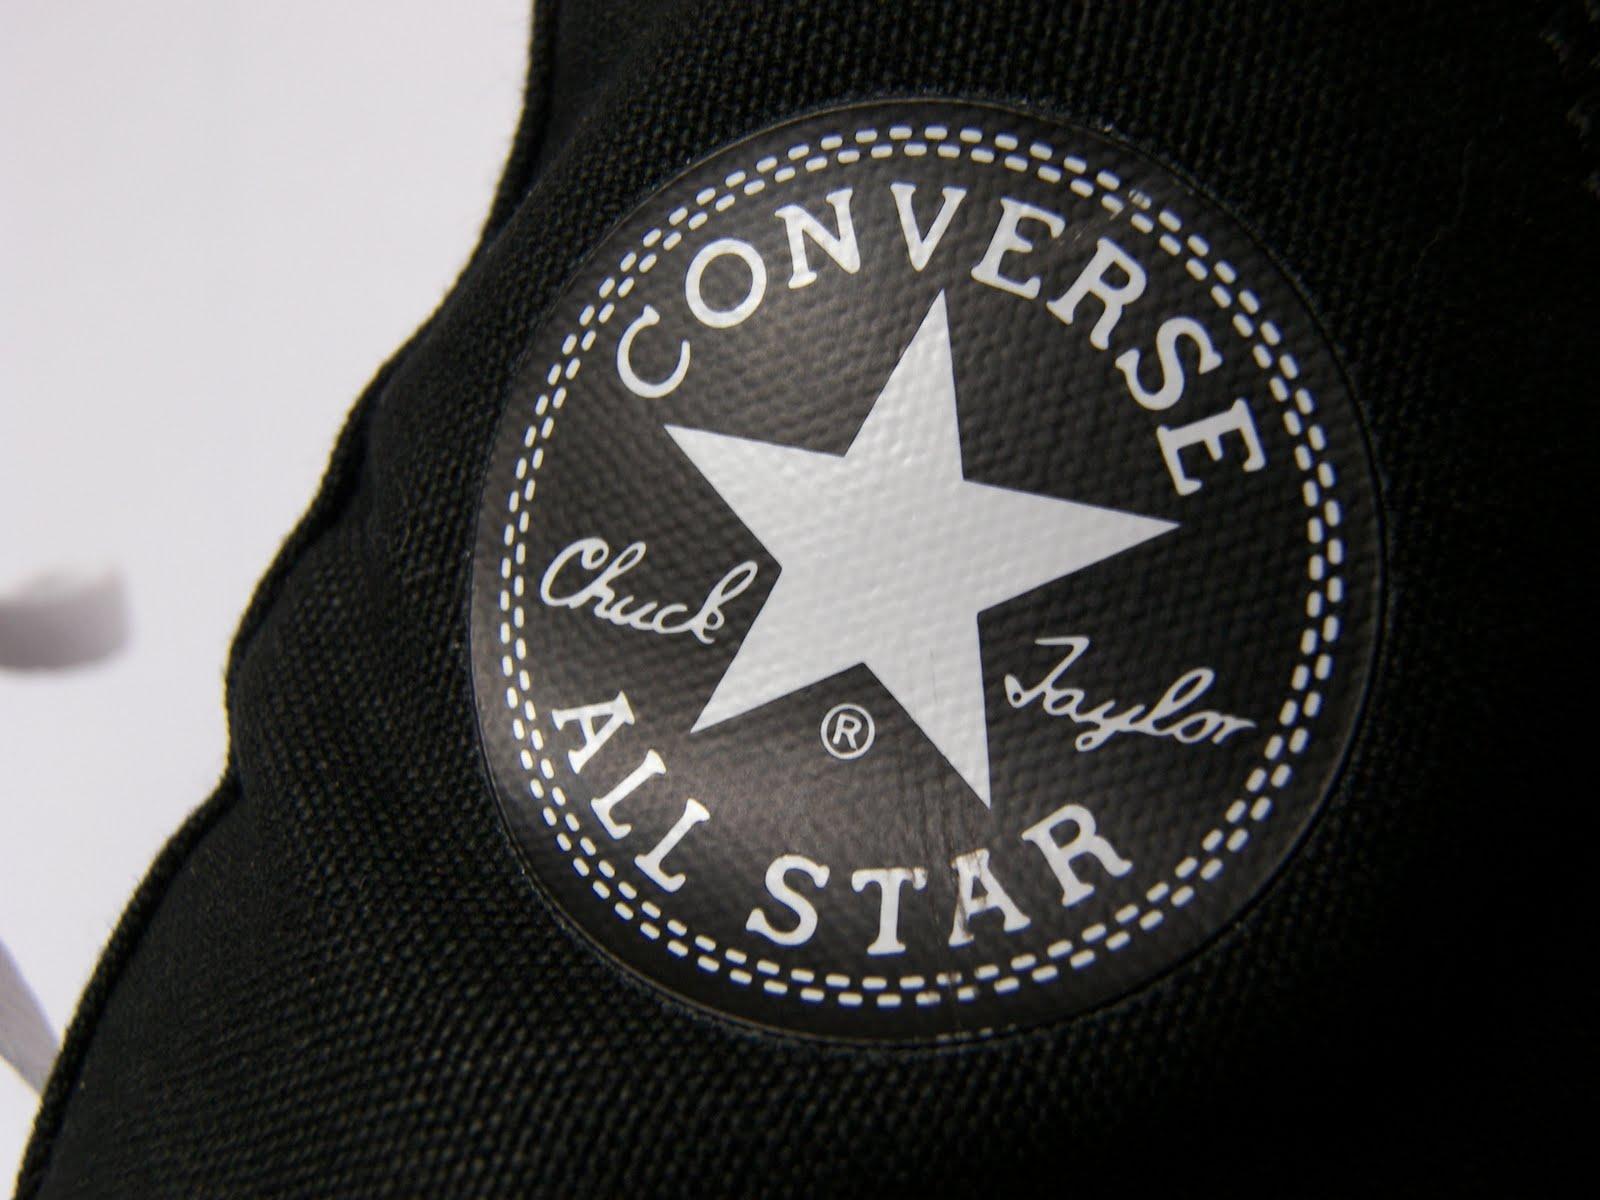 converse. I HD Image